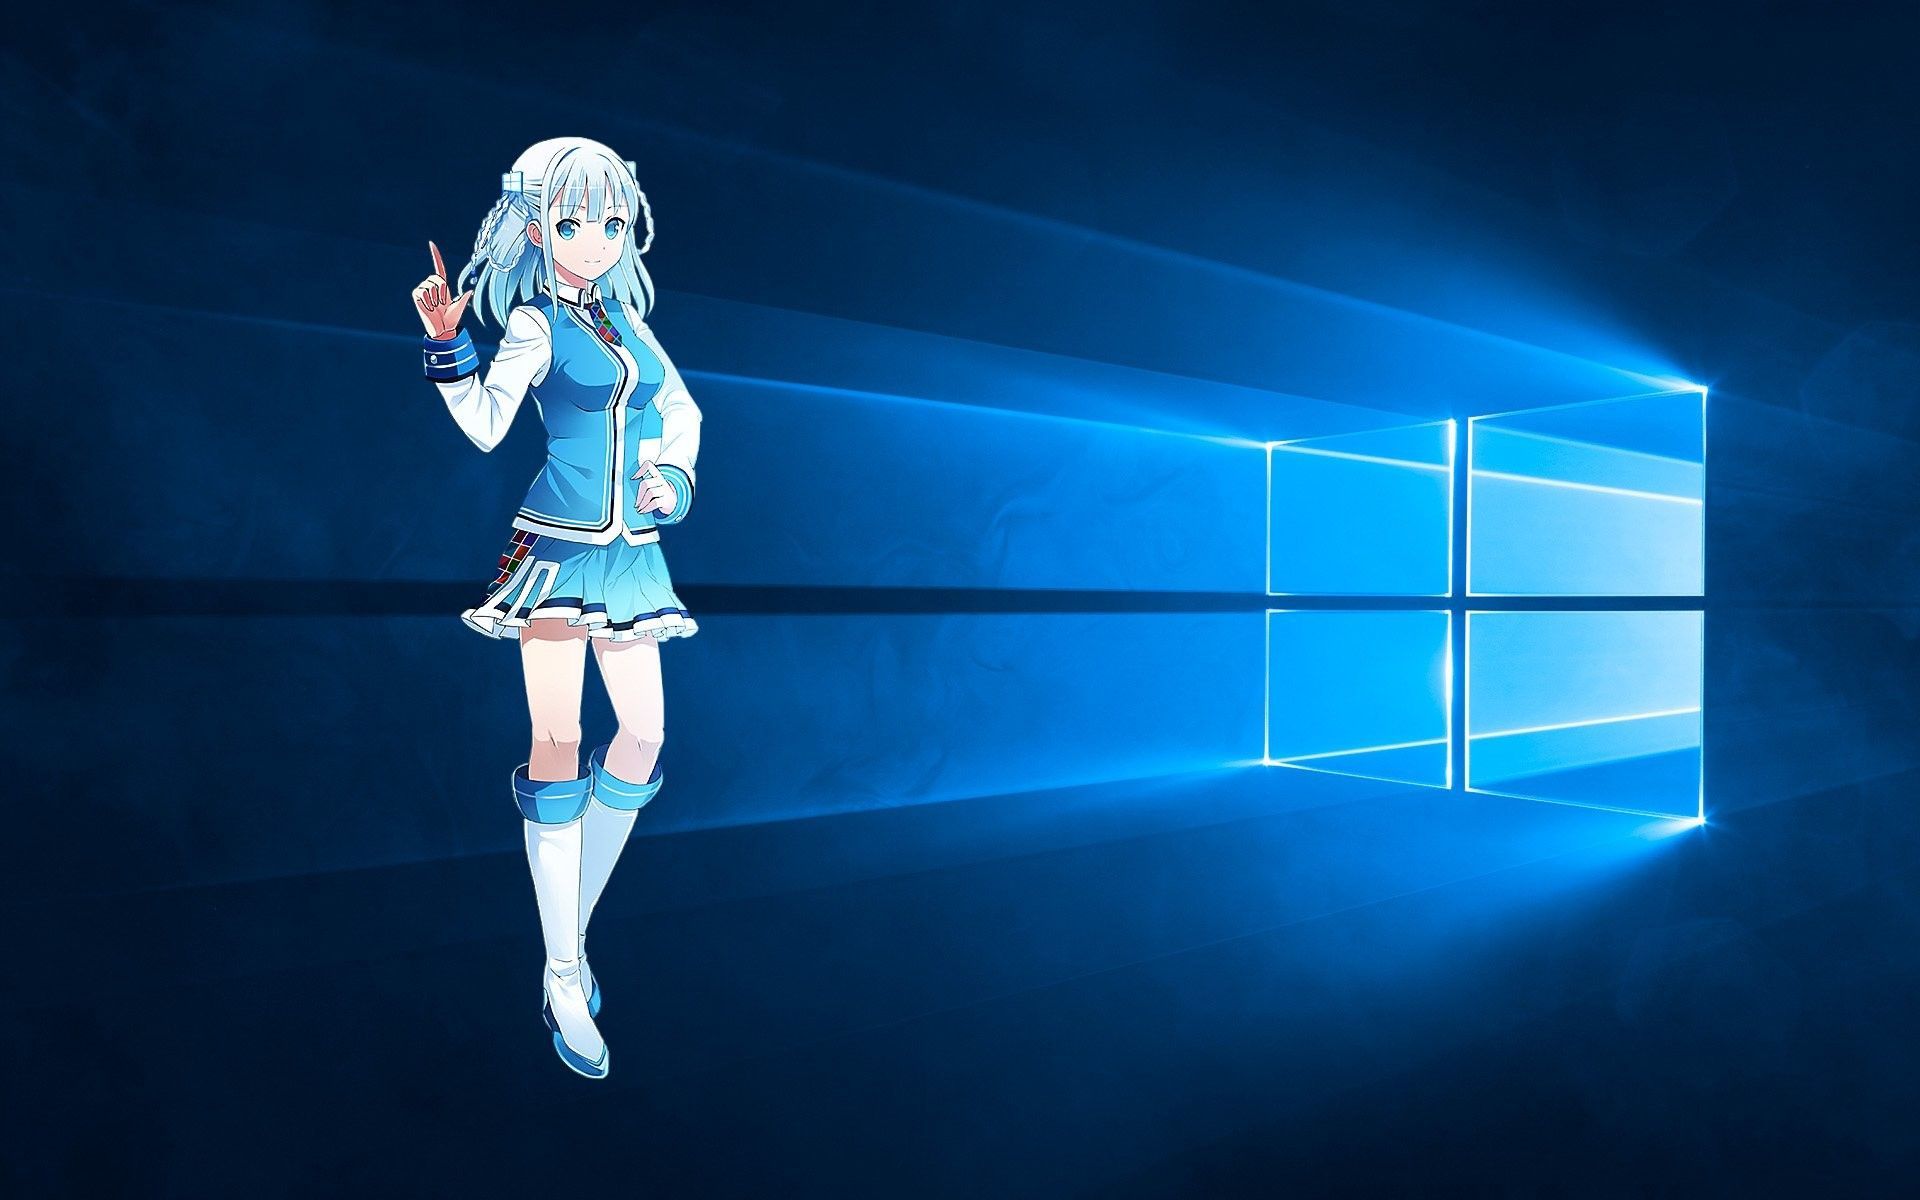 Windows 10 Wallpaper Anime. mywallpaper site. Wallpaper windows 1080p anime wallpaper, Cool anime wallpaper